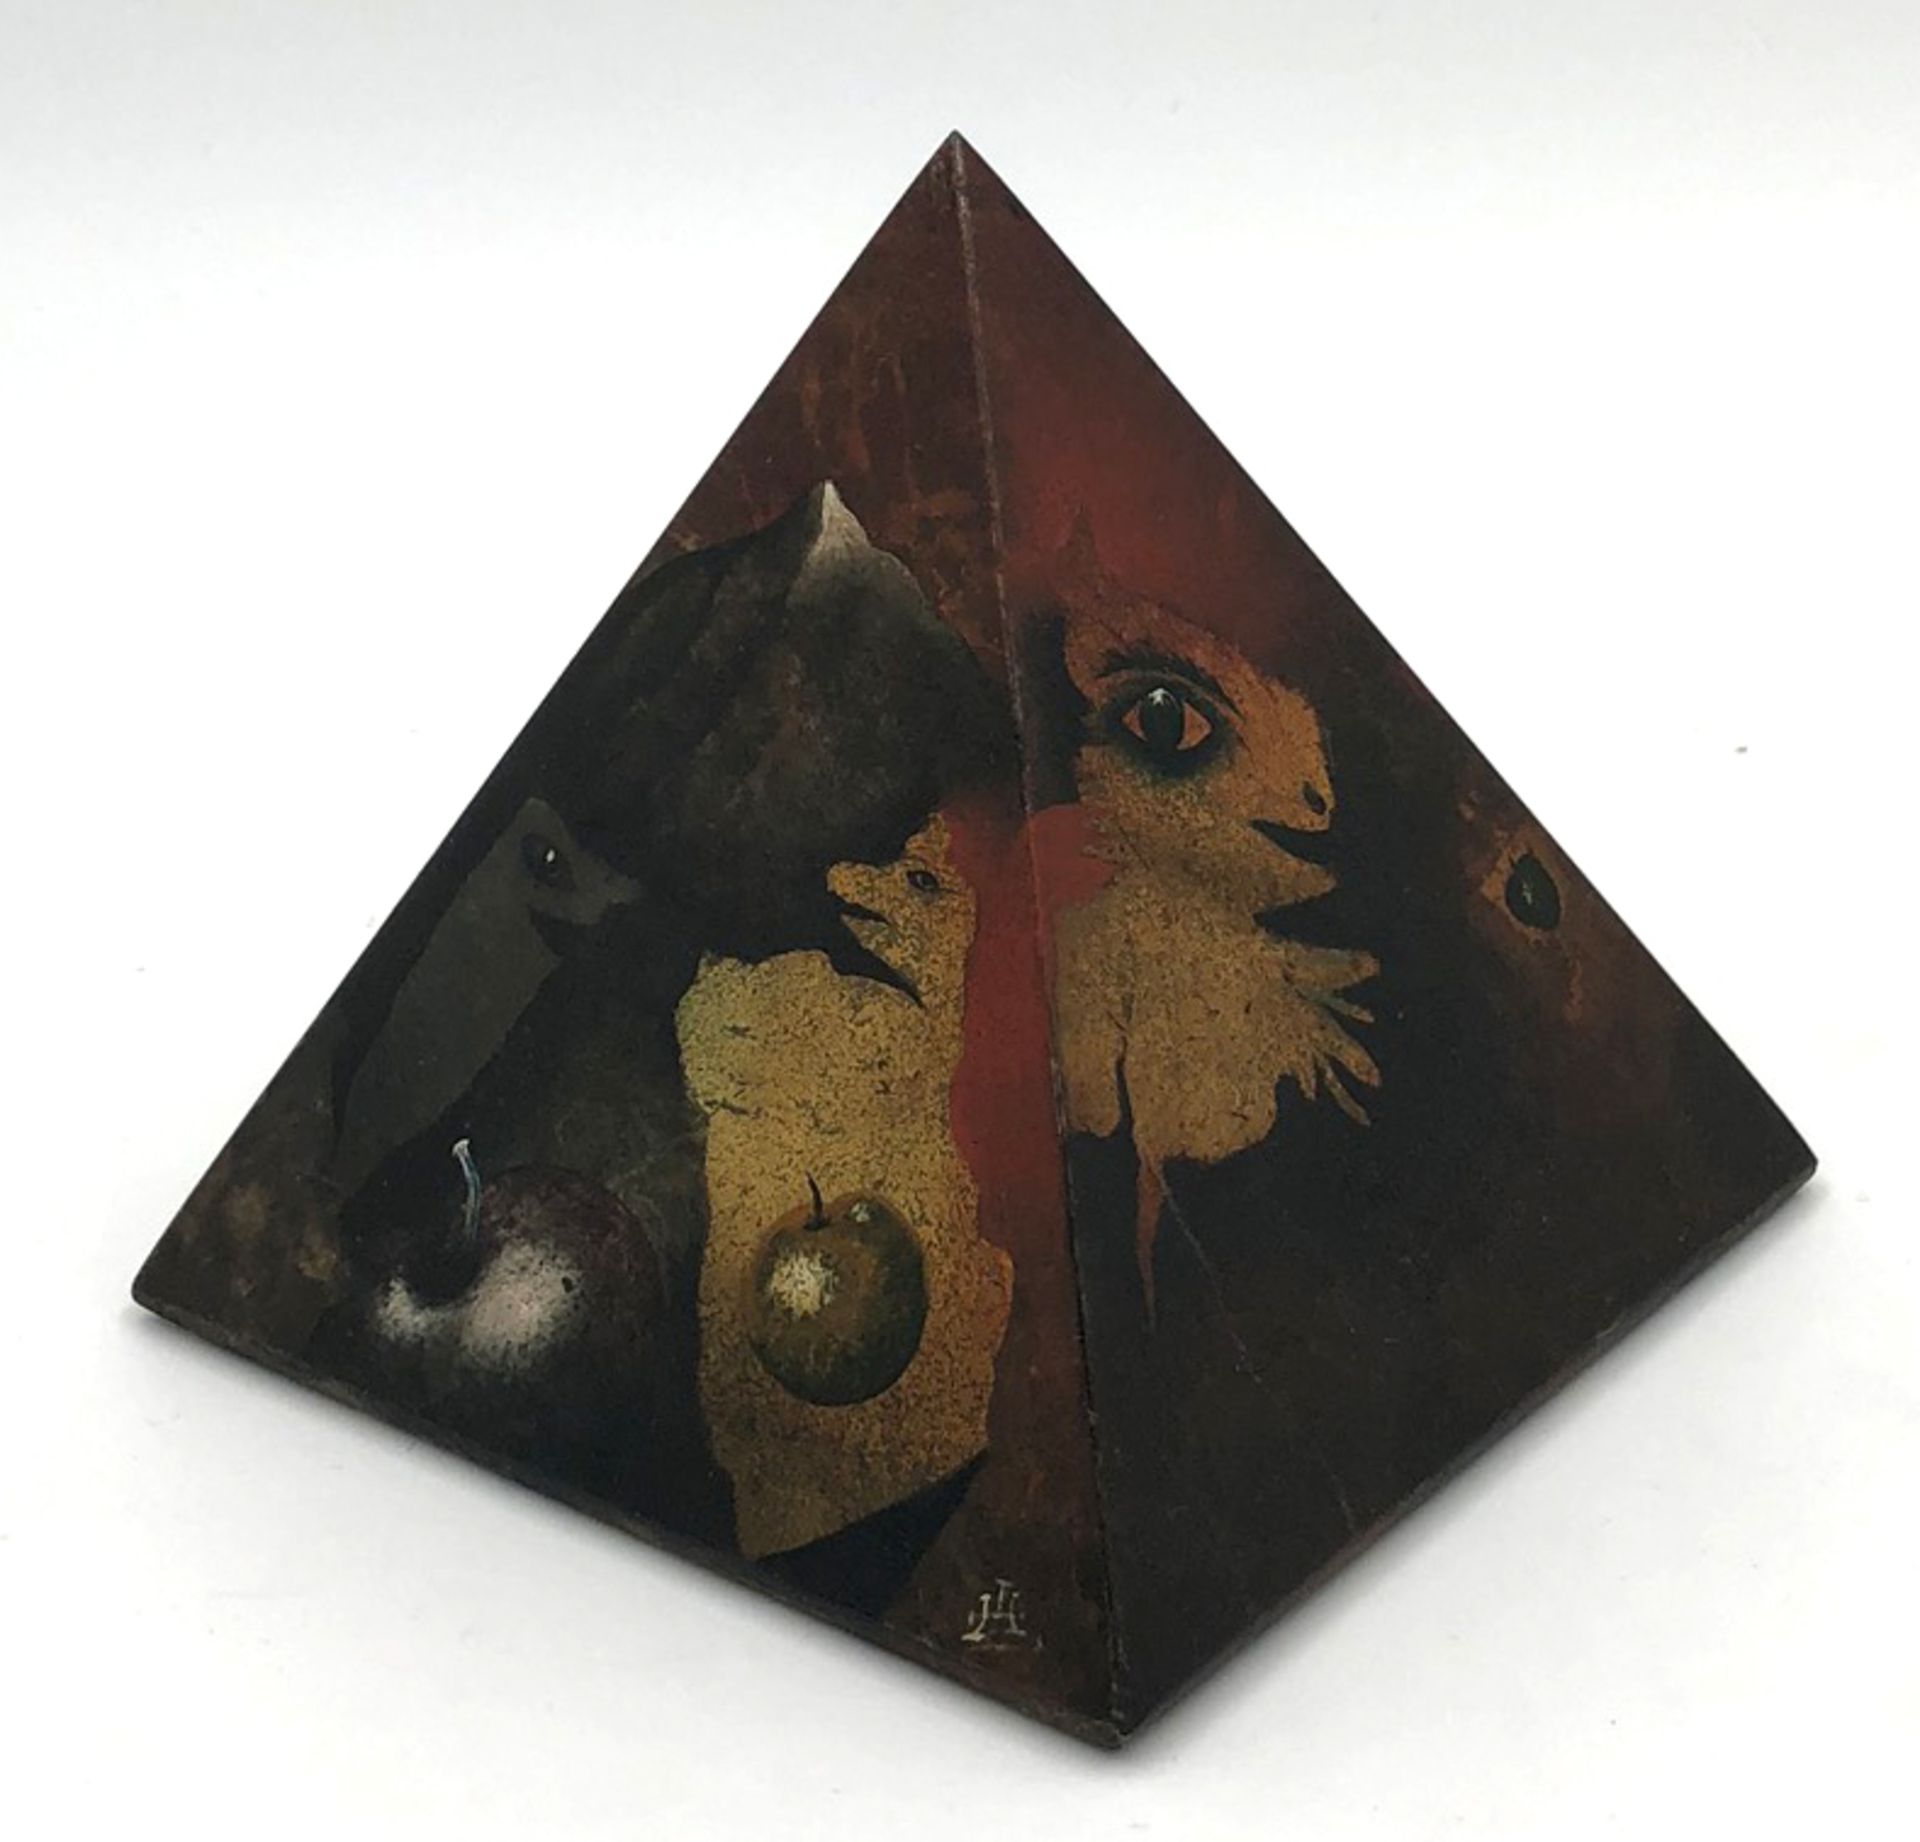 Horst G. LOEWEL (1939 -). ''Die Teidepyramide''.15 cm x 15 x 15 cm. Sculpture. Oil on stone.